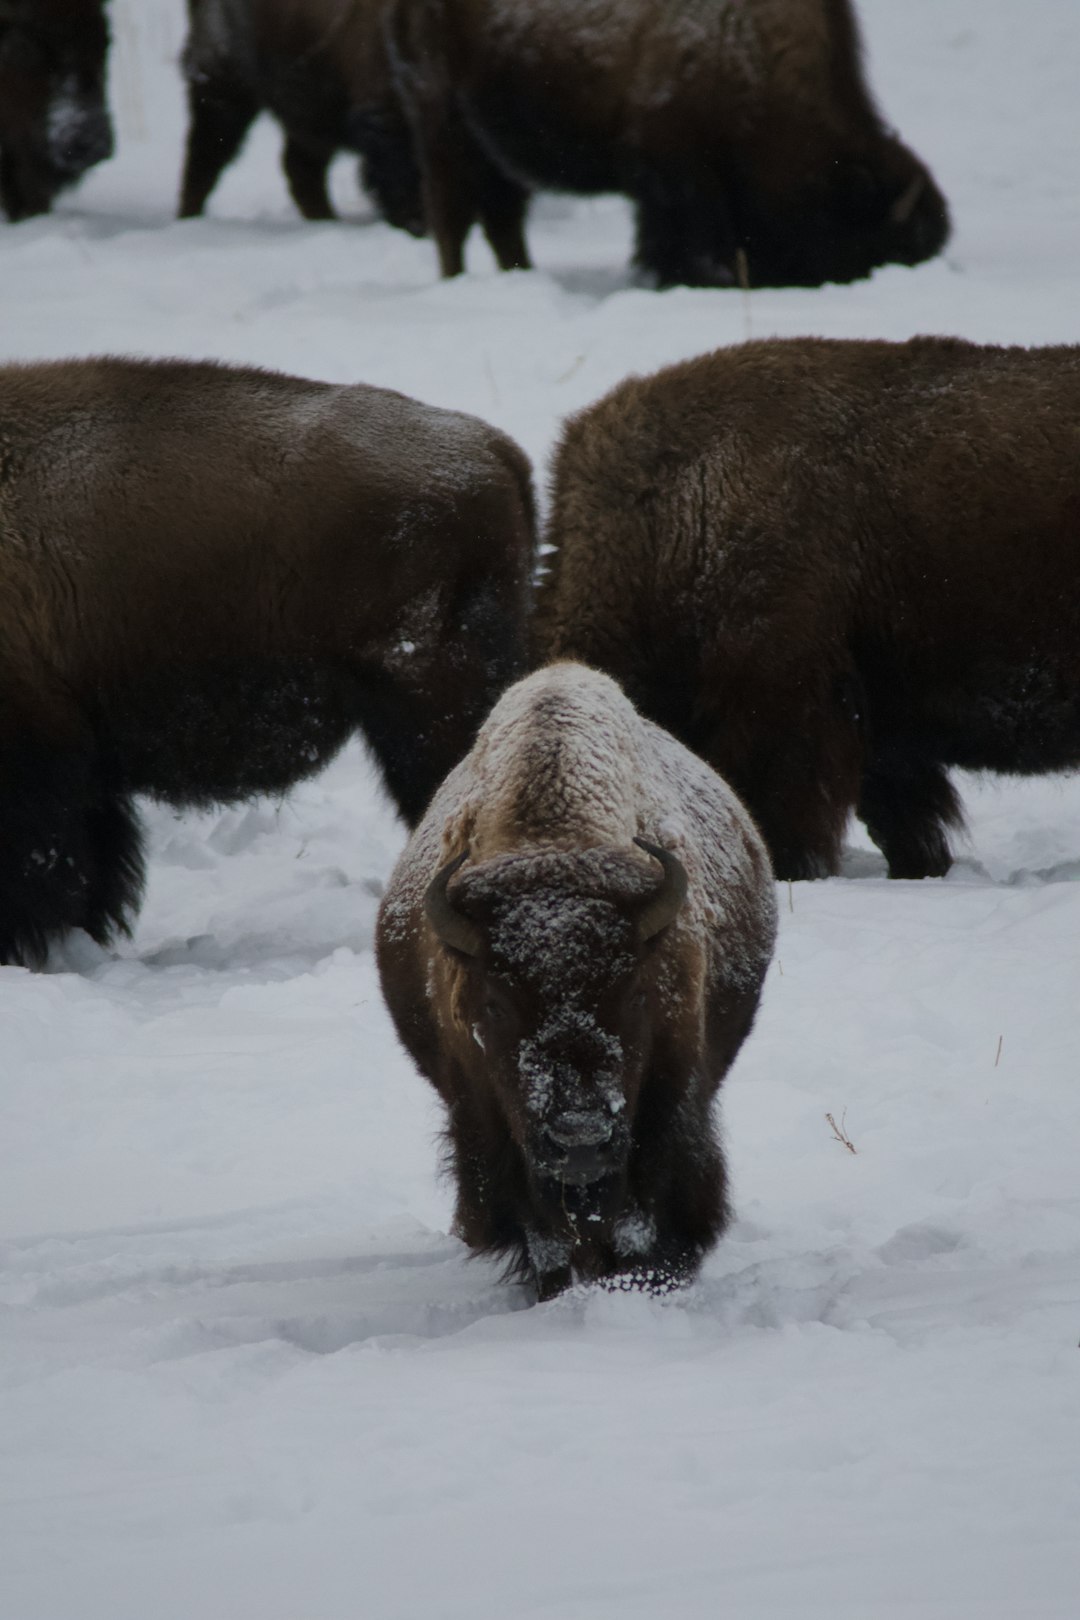 brown bison on white snow field during daytime